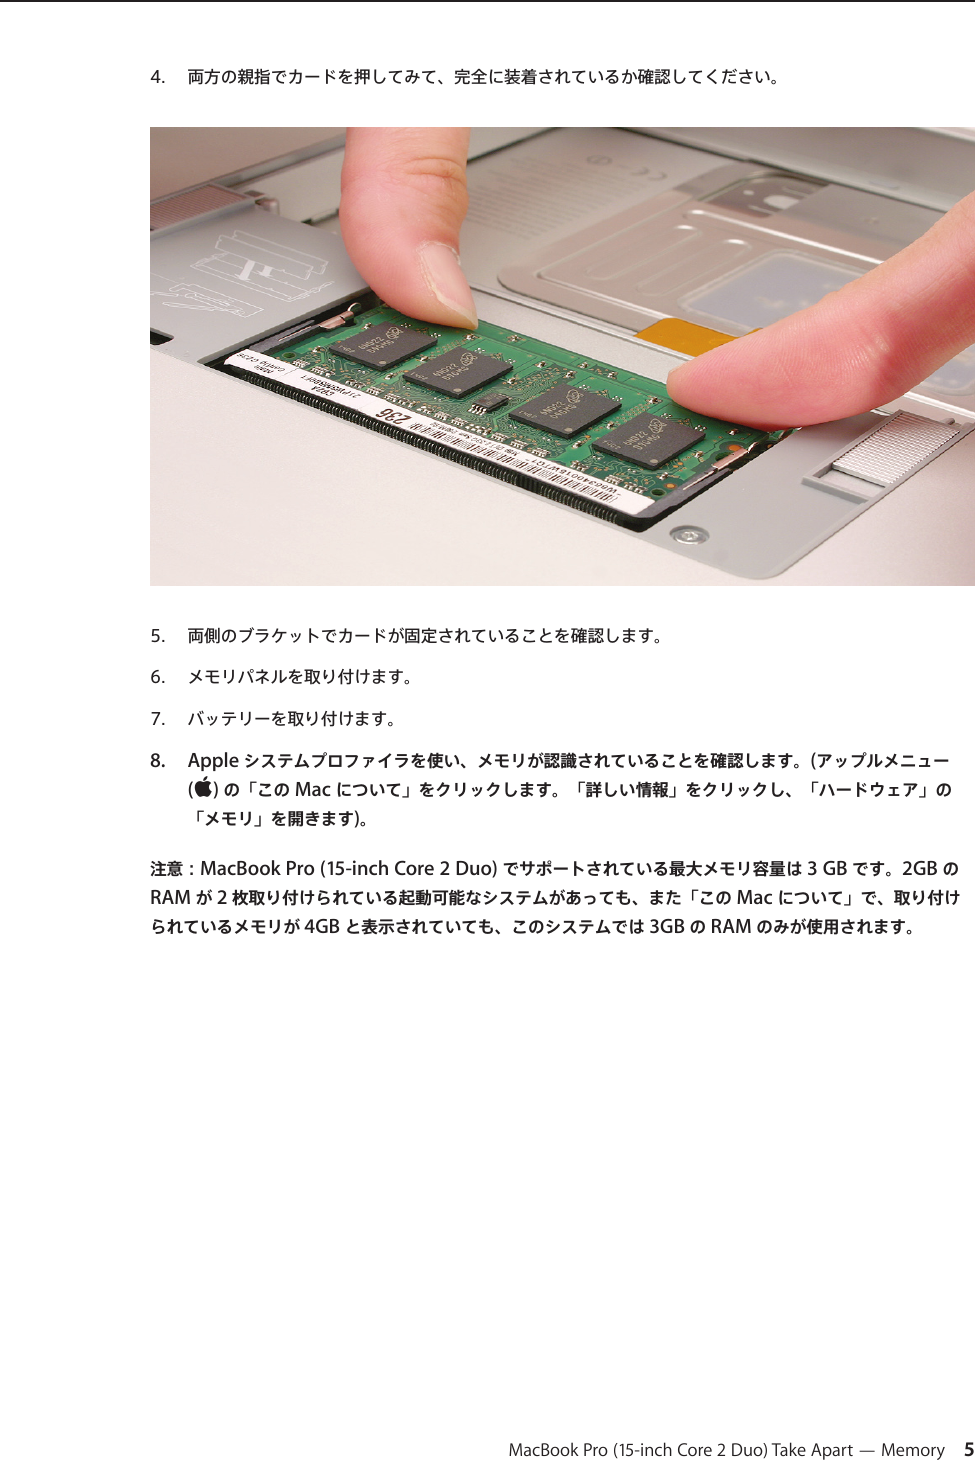 Apple Macbookpro Macbook Pro メモリ交換手順 Diy マニュアル User Manual Mac Book メモリ 交換手順 Memory Diy Replacement Instructions